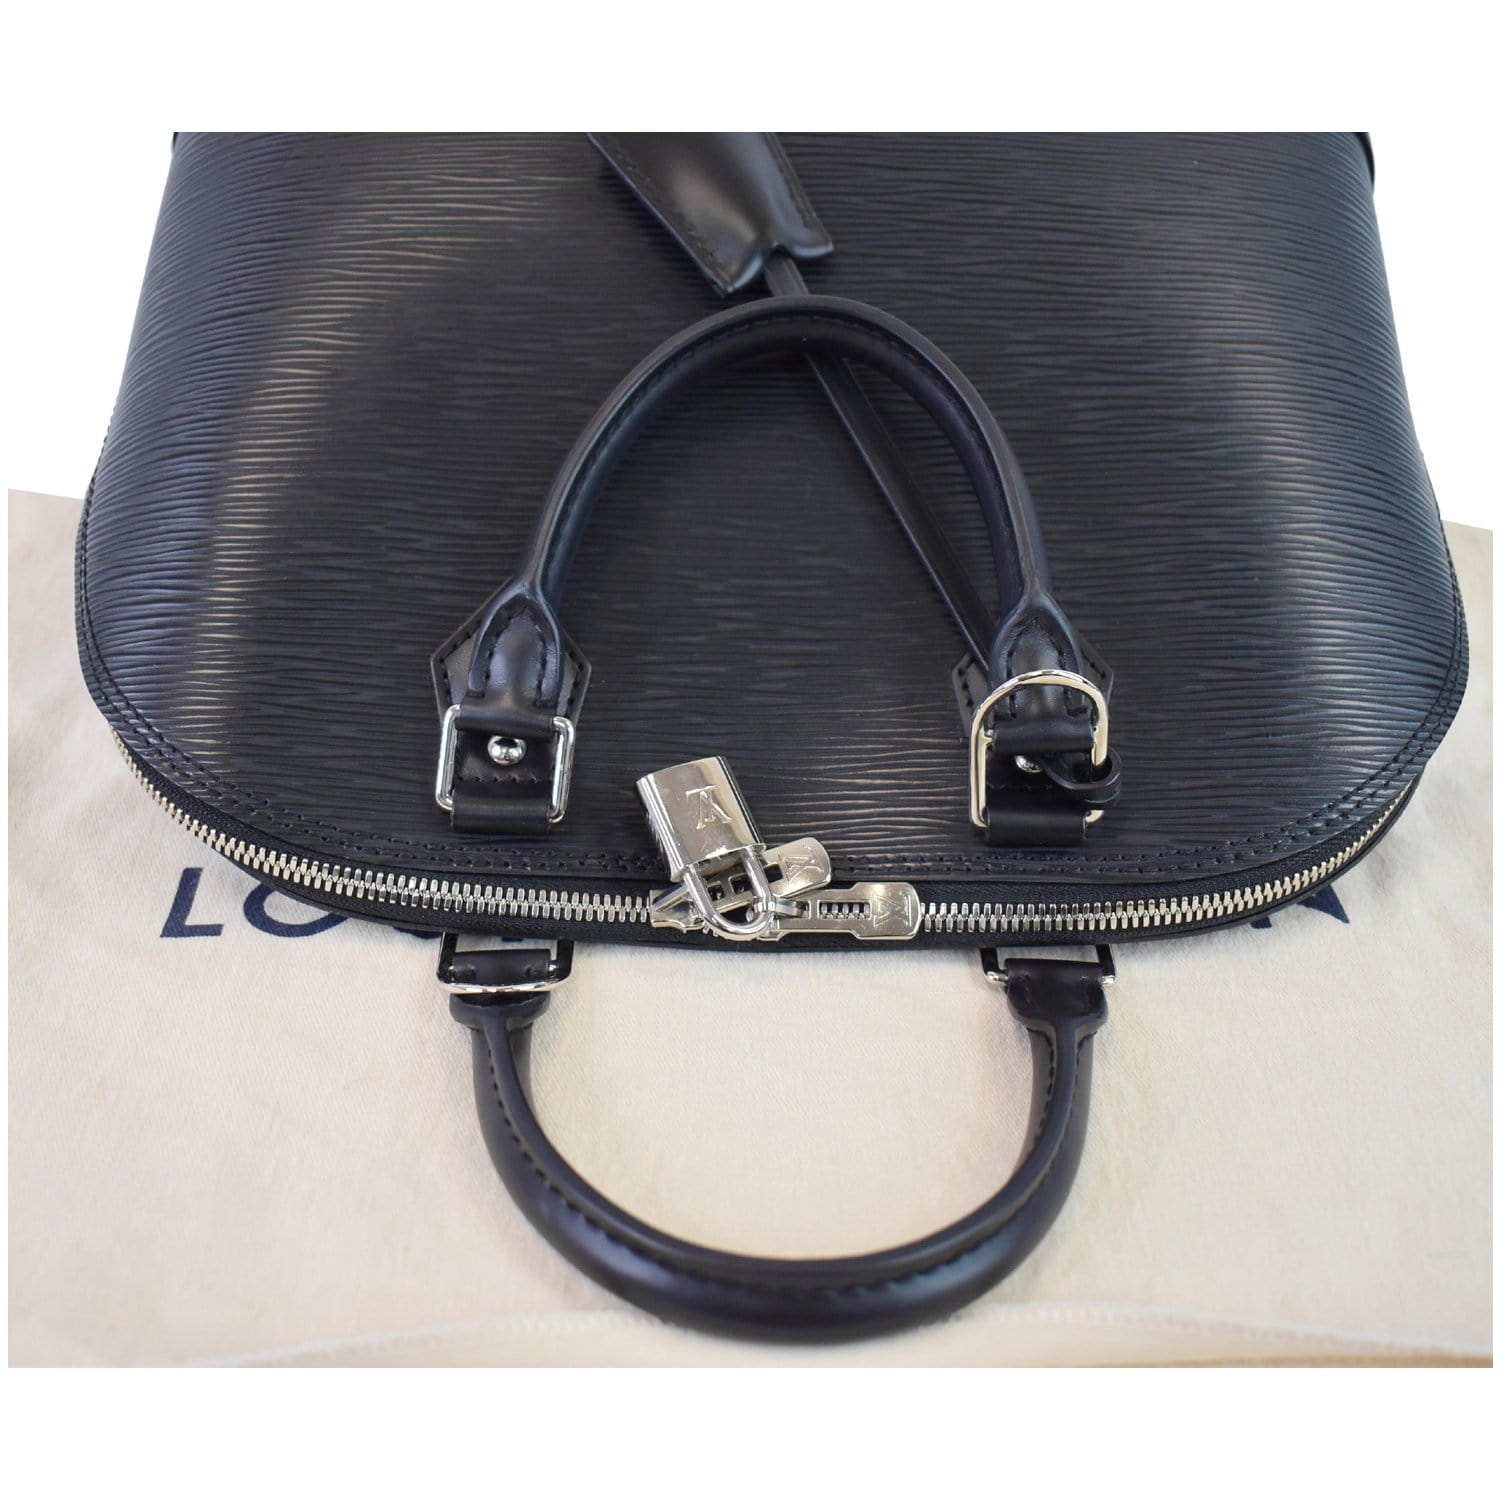 LOUIS VUITTON Epi Leather Alma PM Black Satchel Bag